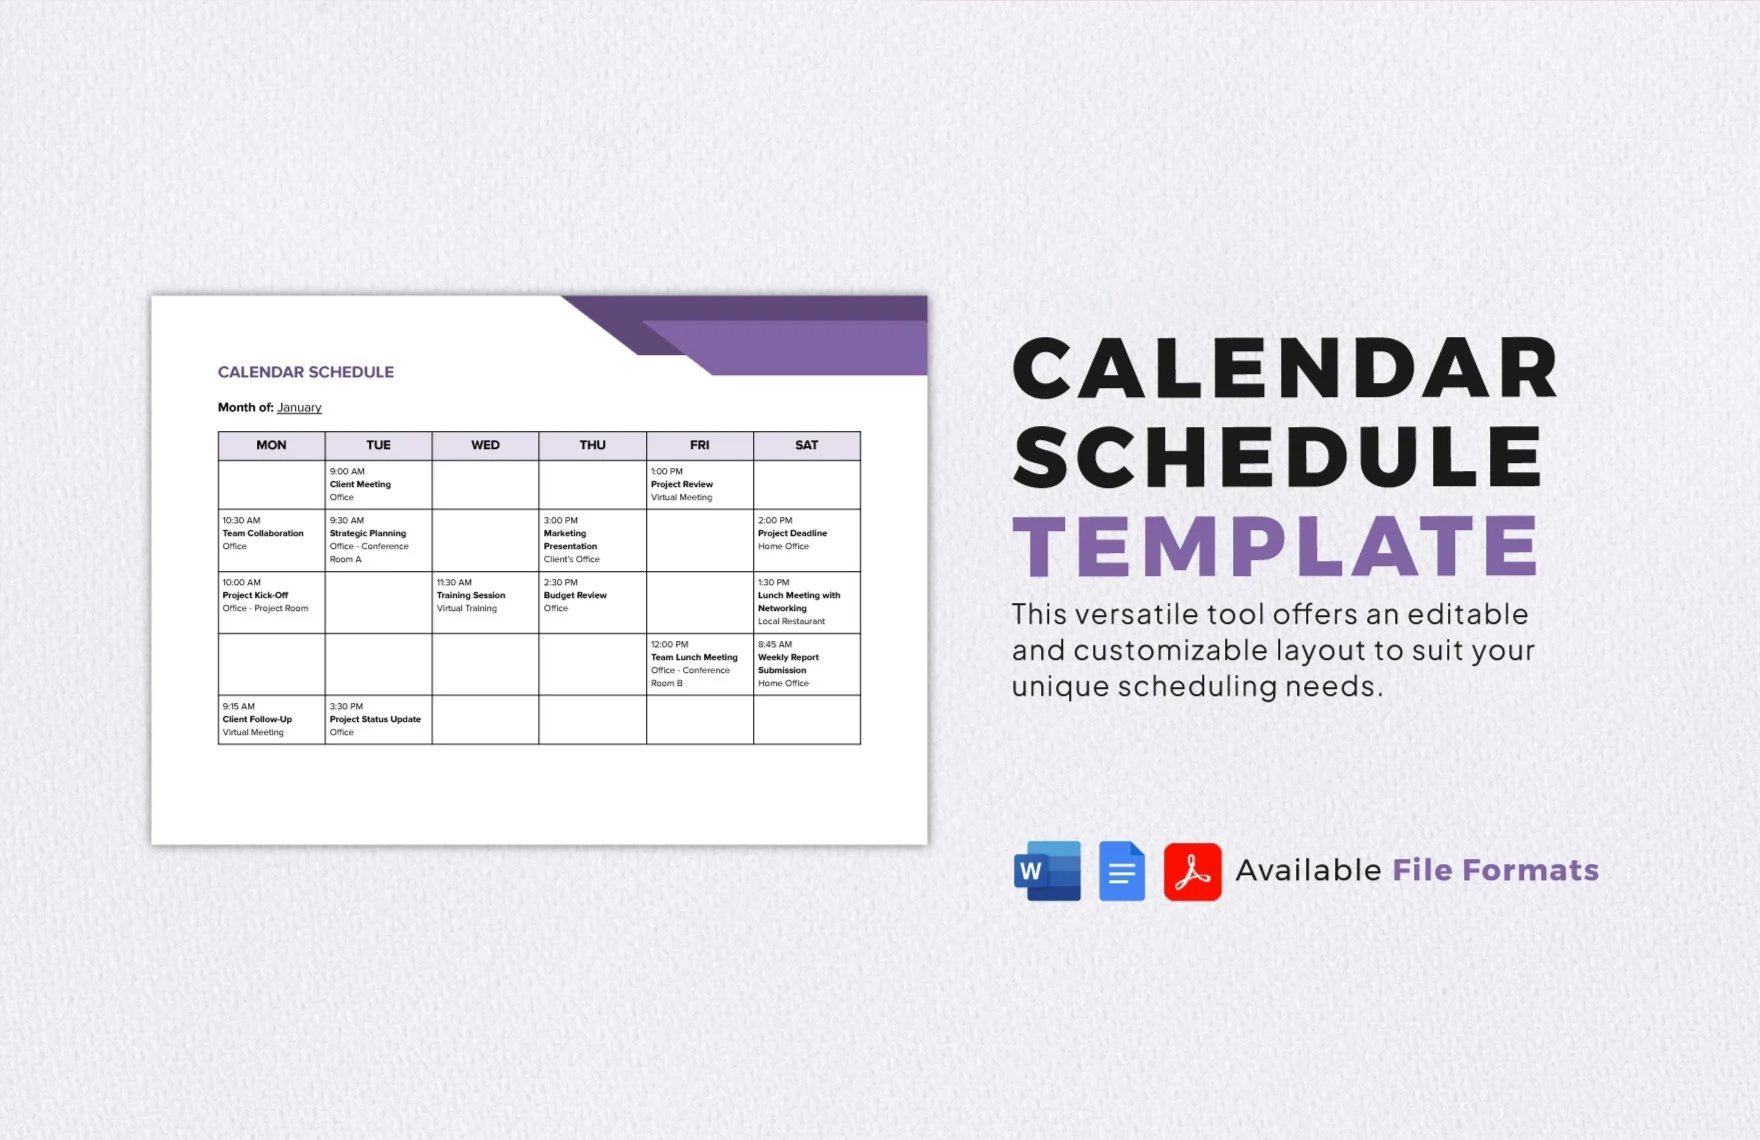 Calendar Schedule Template in Word, Google Docs, PDF